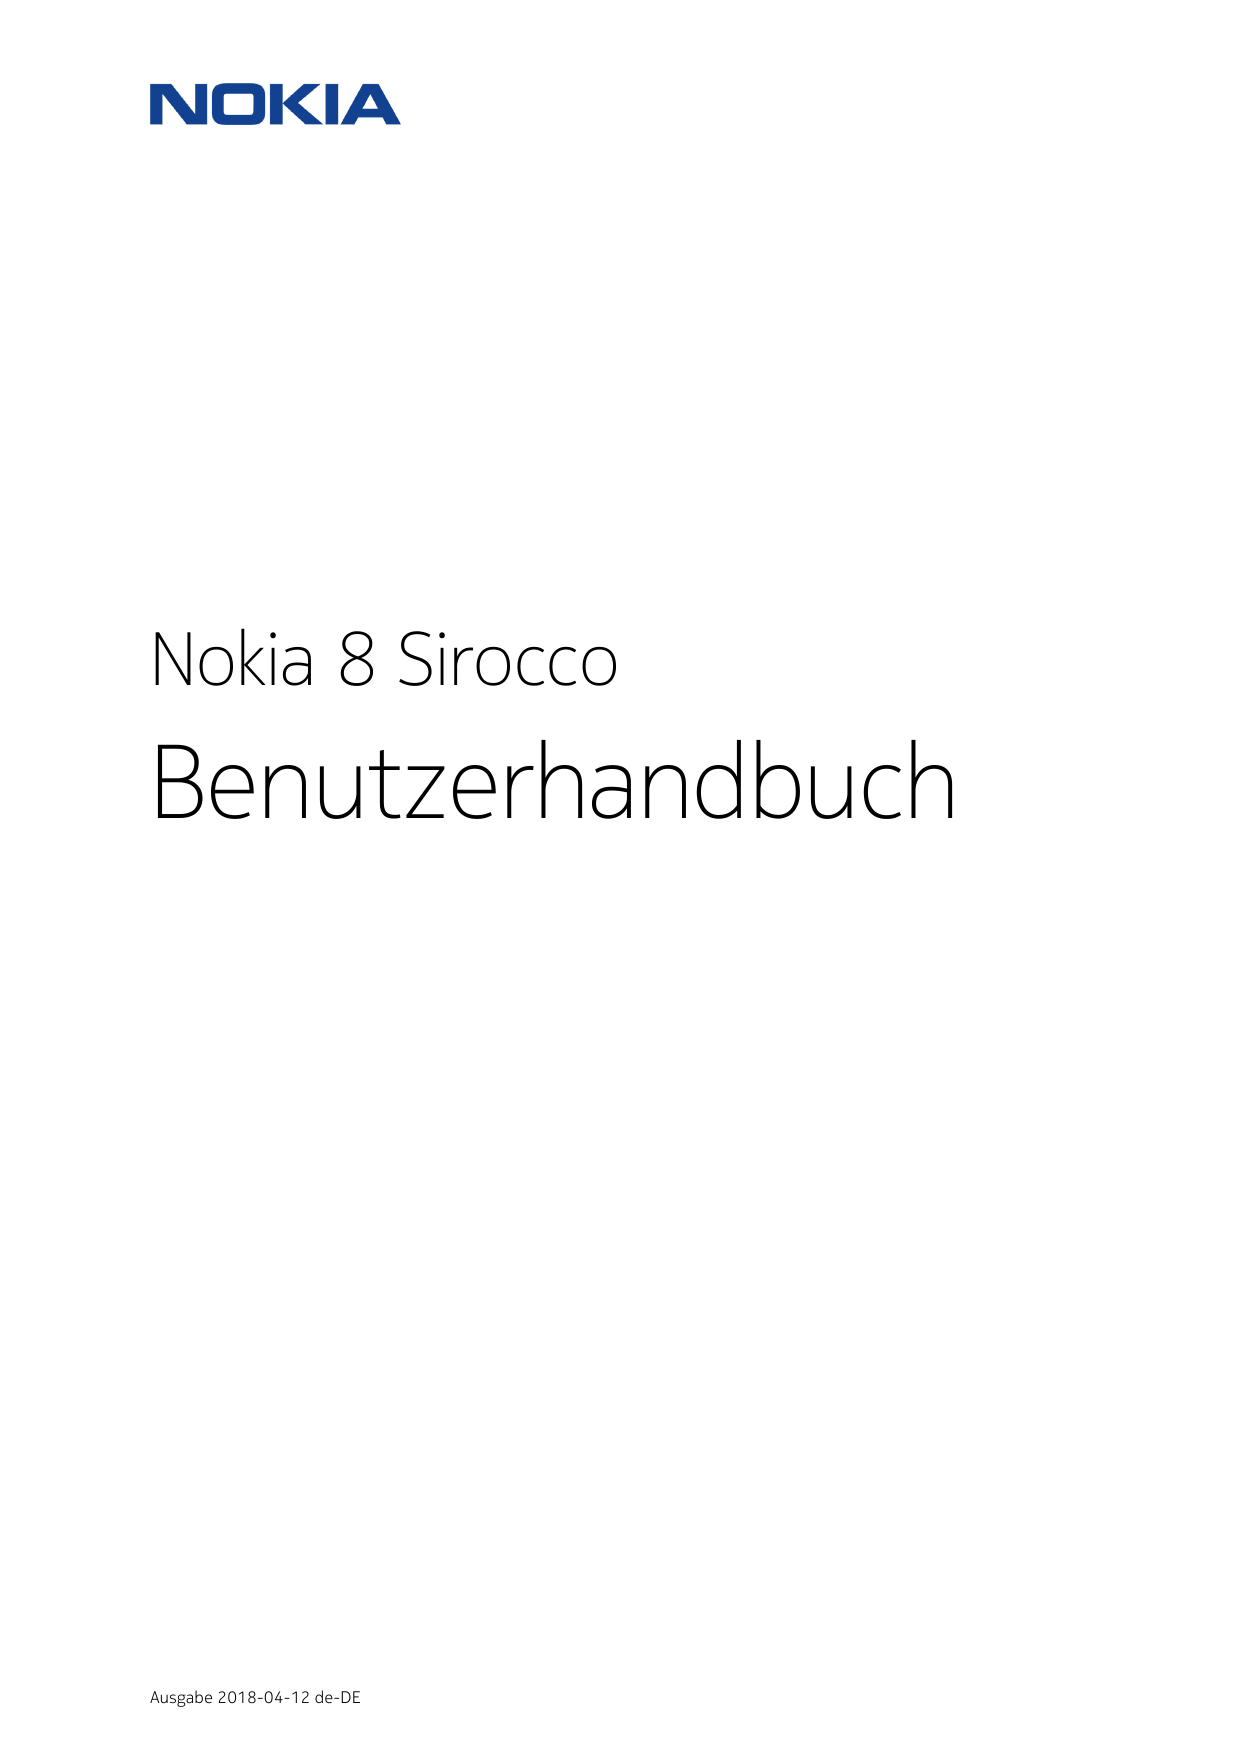 Nokia 8 SiroccoBenutzerhandbuchAusgabe 2018-04-12 de-DE